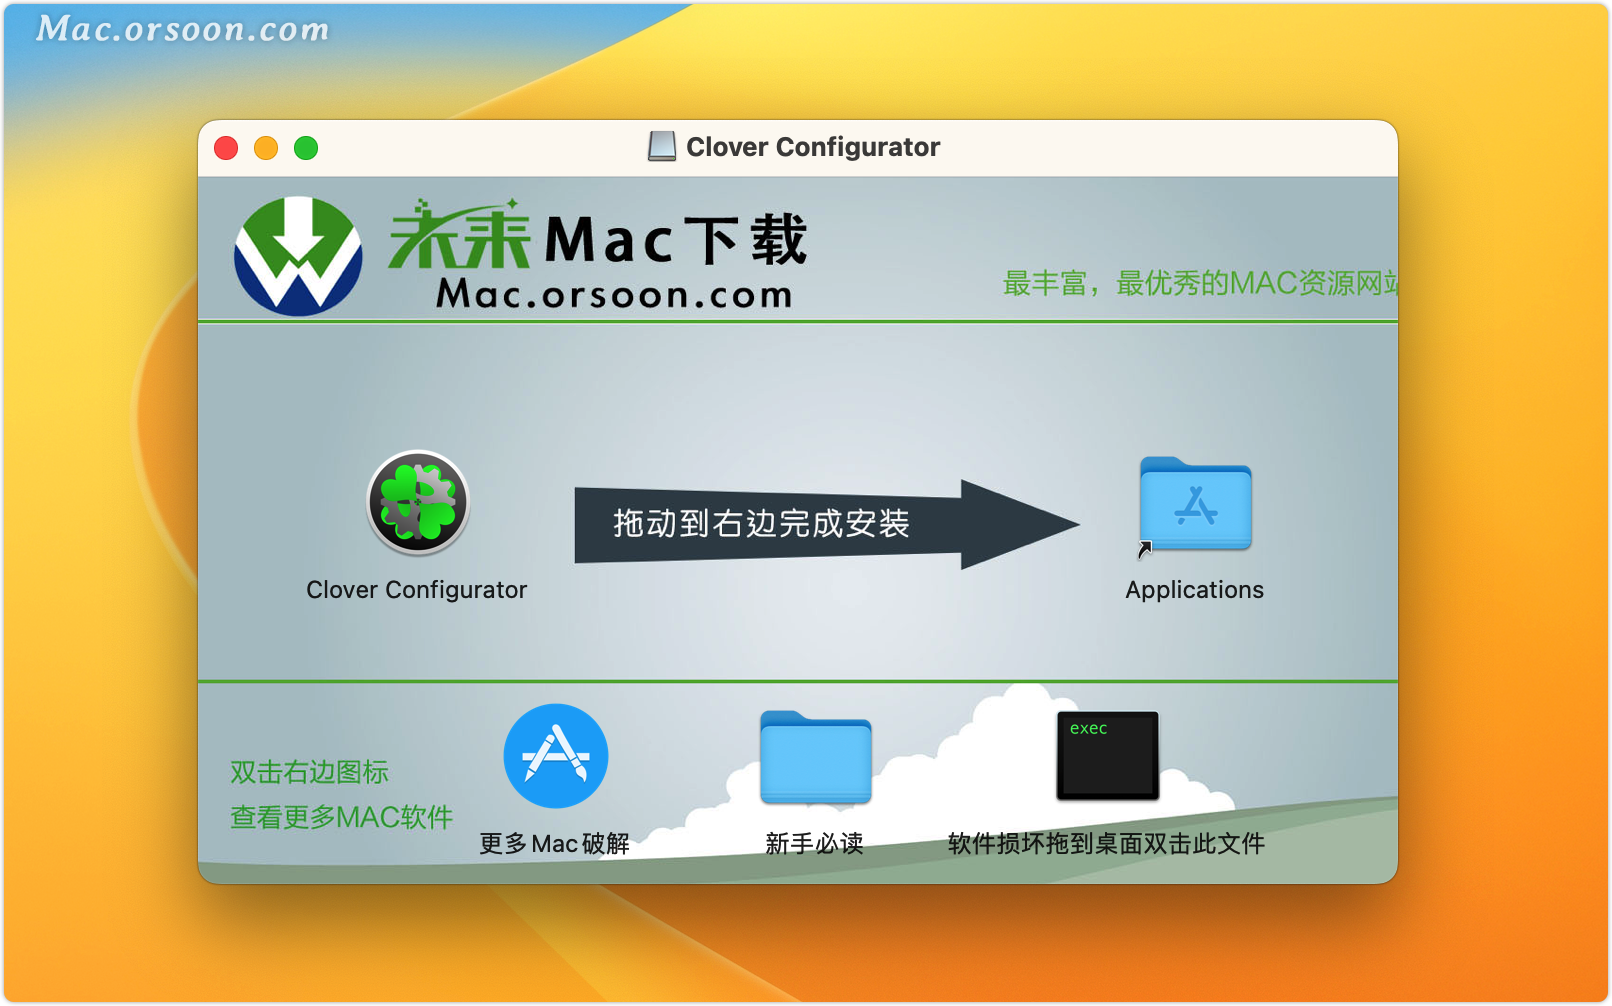 clover configurator on mac vmware